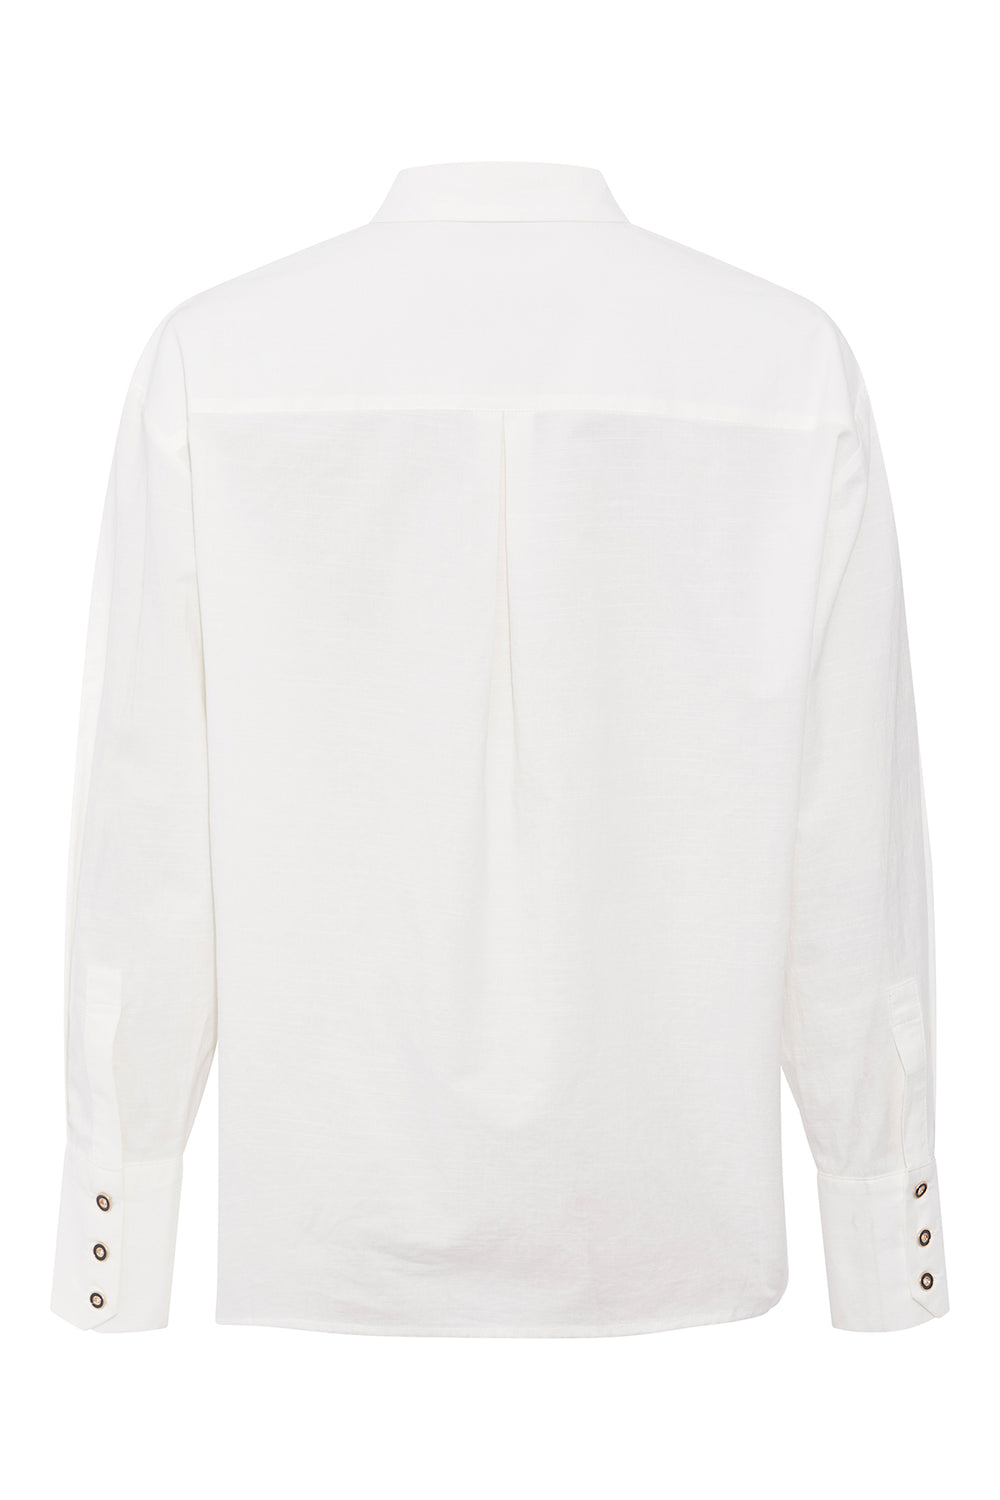 Rue de Femme Harper skjorte SHIRTS 02 Off white